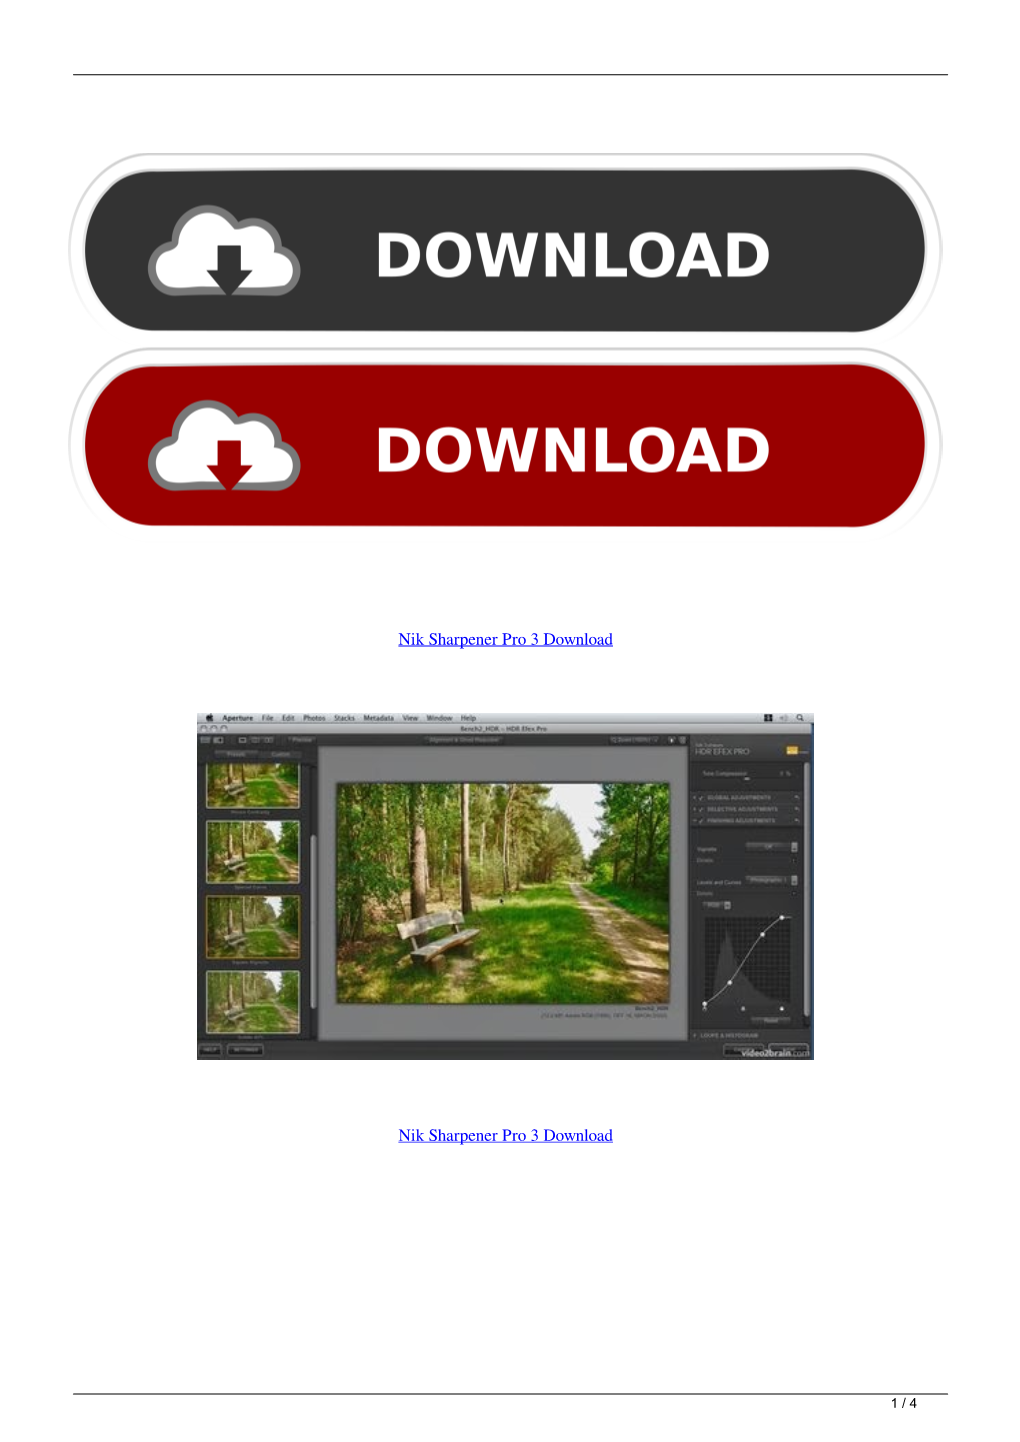 Nik Sharpener Pro 3 Download